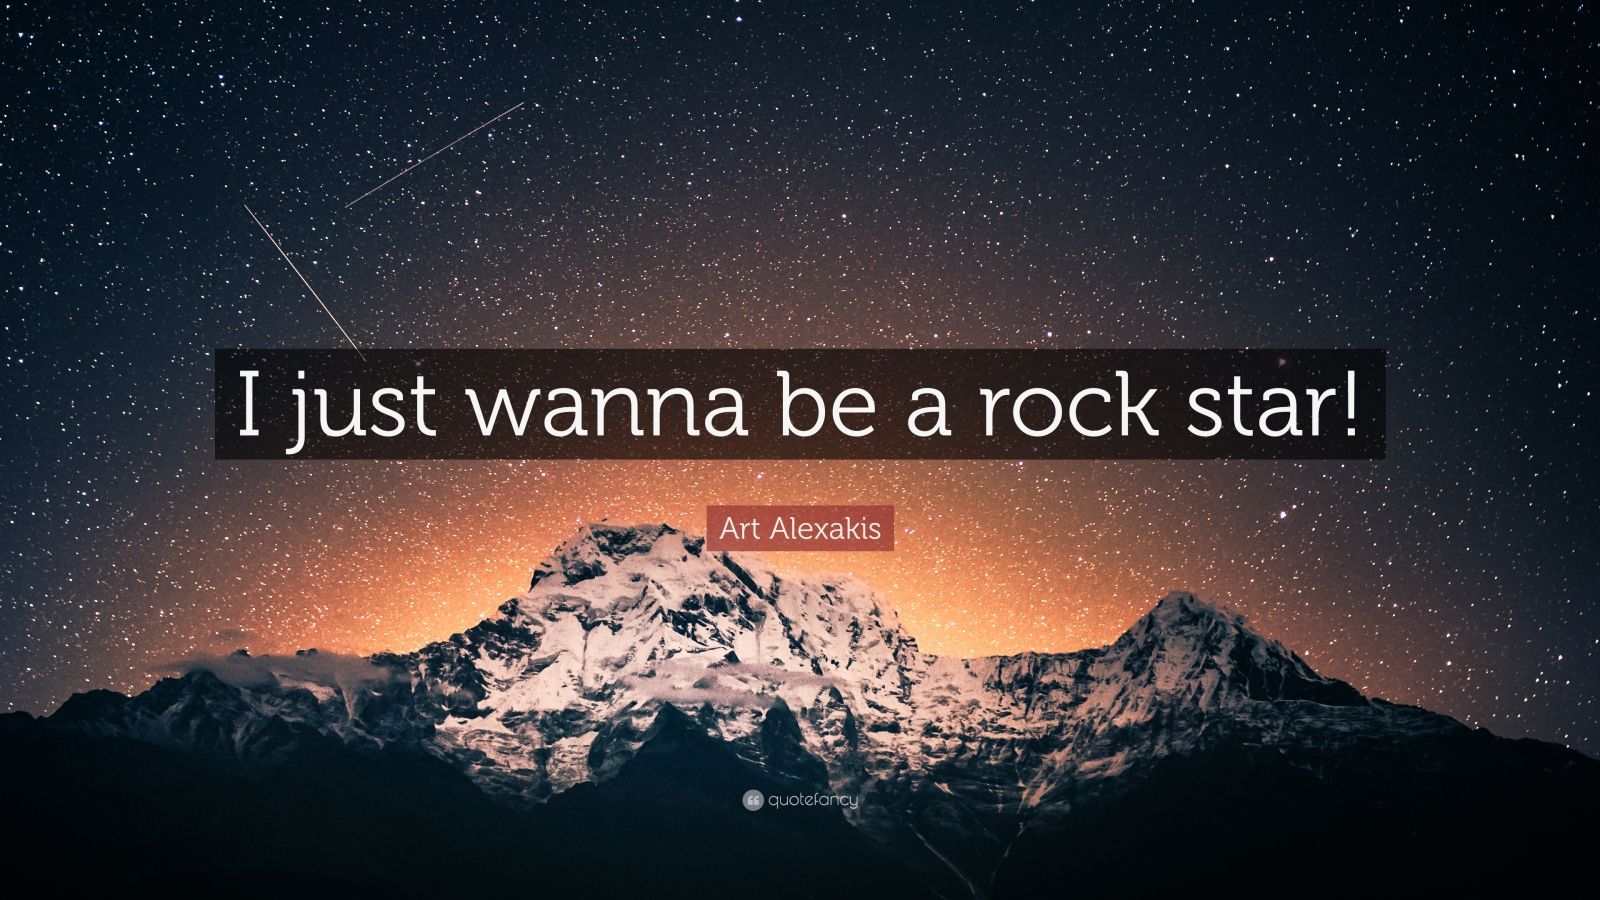 go little rockstar lyrics meaning